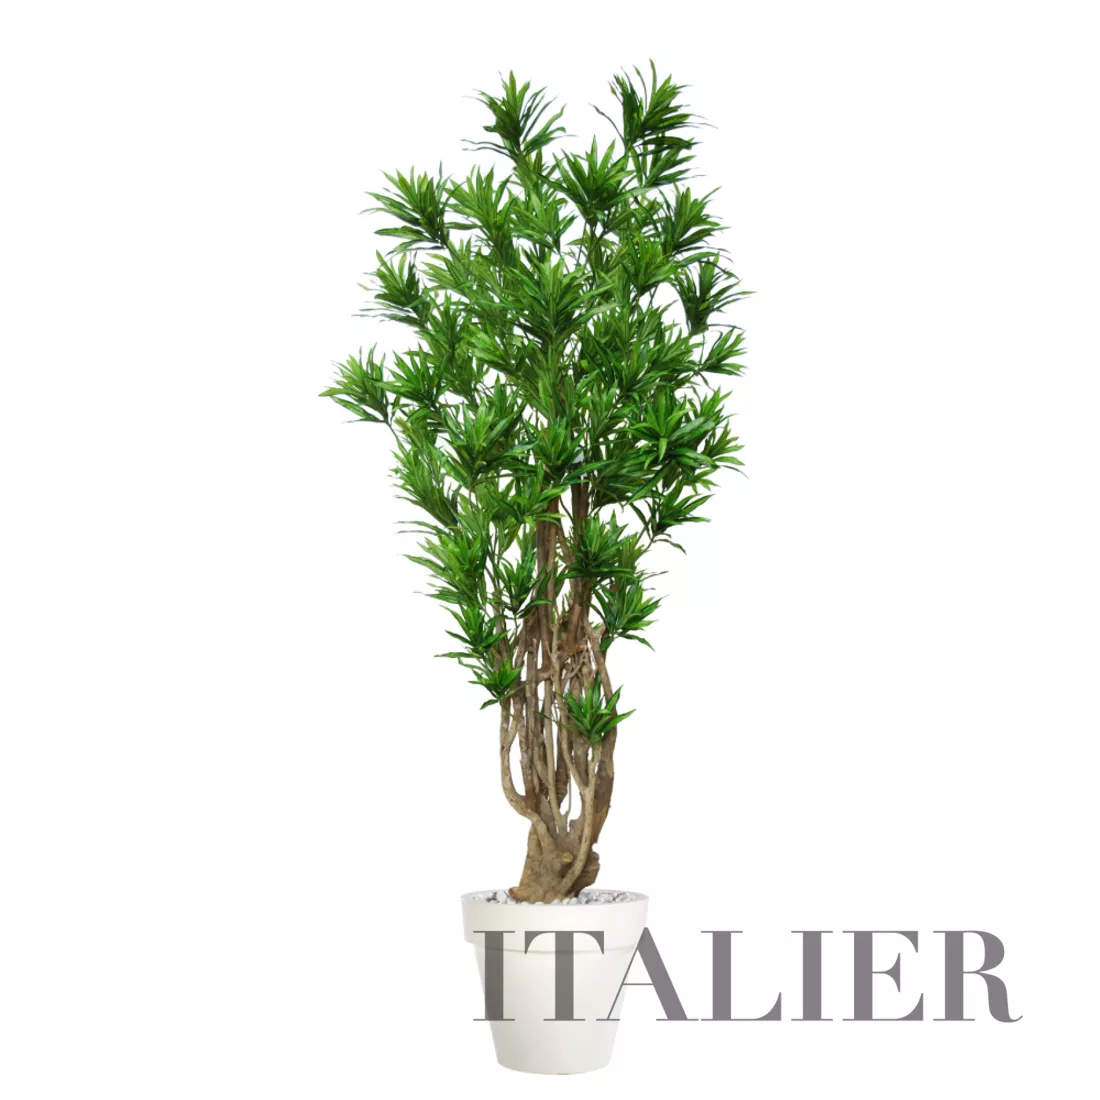 Rostlina Dracaena Reflexa Malabar 220 cm Green 4008A27